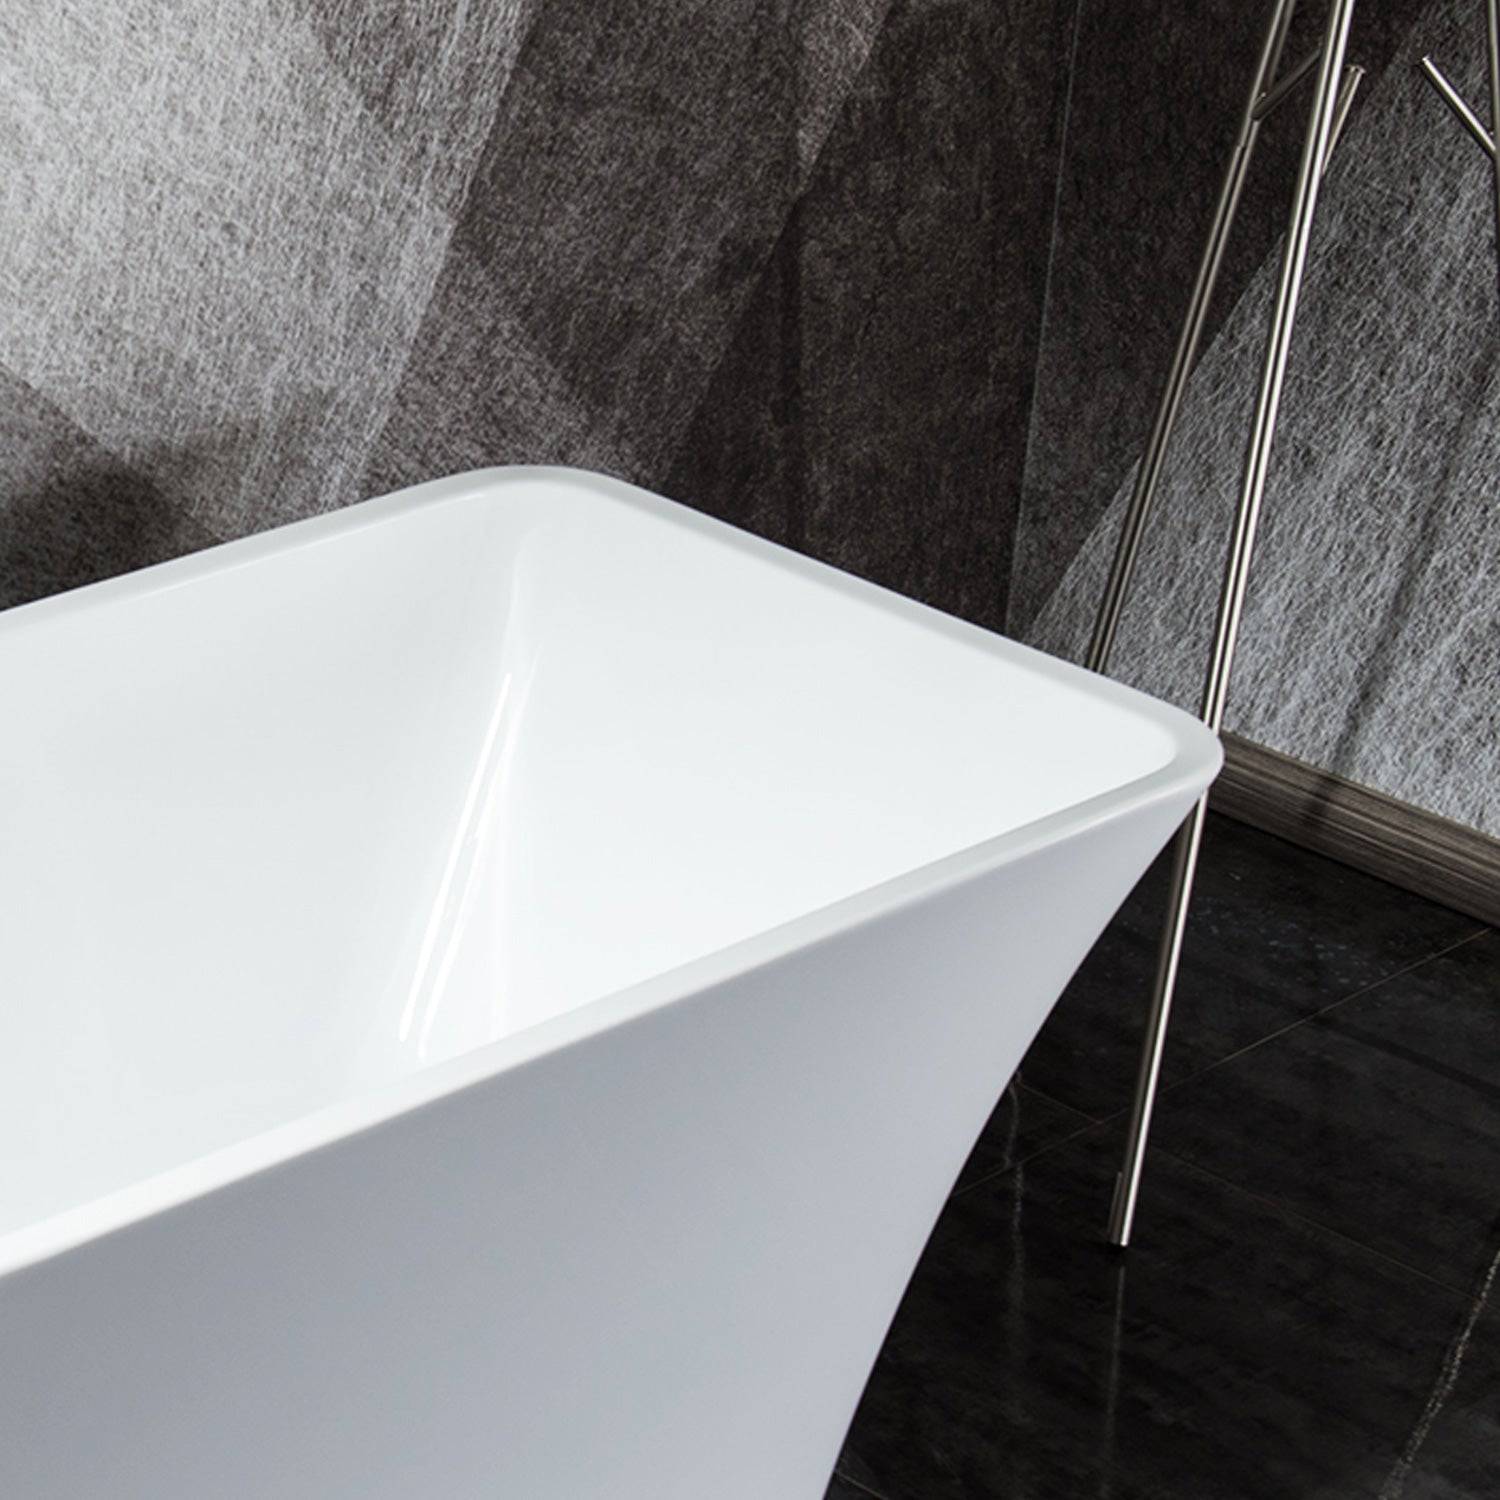 Venetio 57 x 31 inch Acrylic Freestanding Bathtub Classic Square Shape Gloss White - Venetio